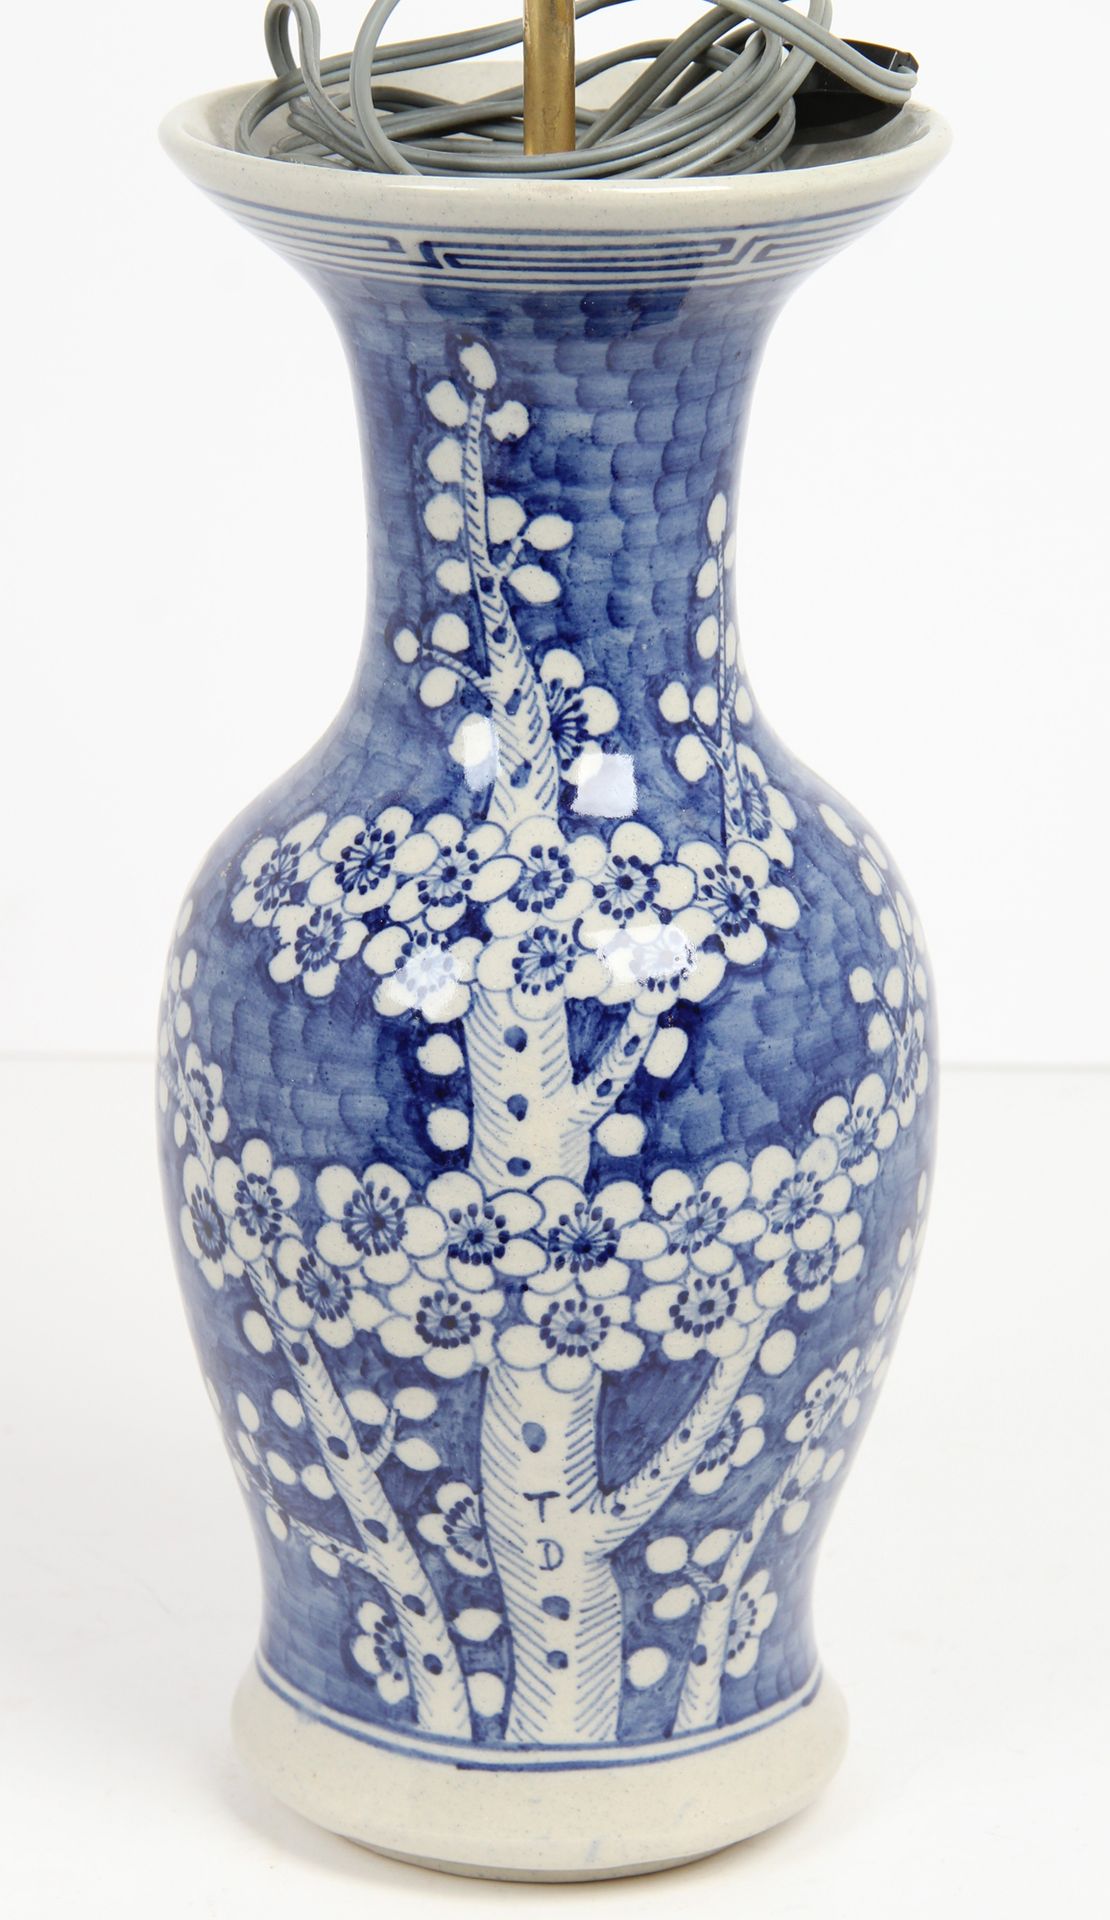 Null 中国味道

炻器花瓶，白蓝色樱花装饰。

H.高 37 厘米。

(作为灯具安装）